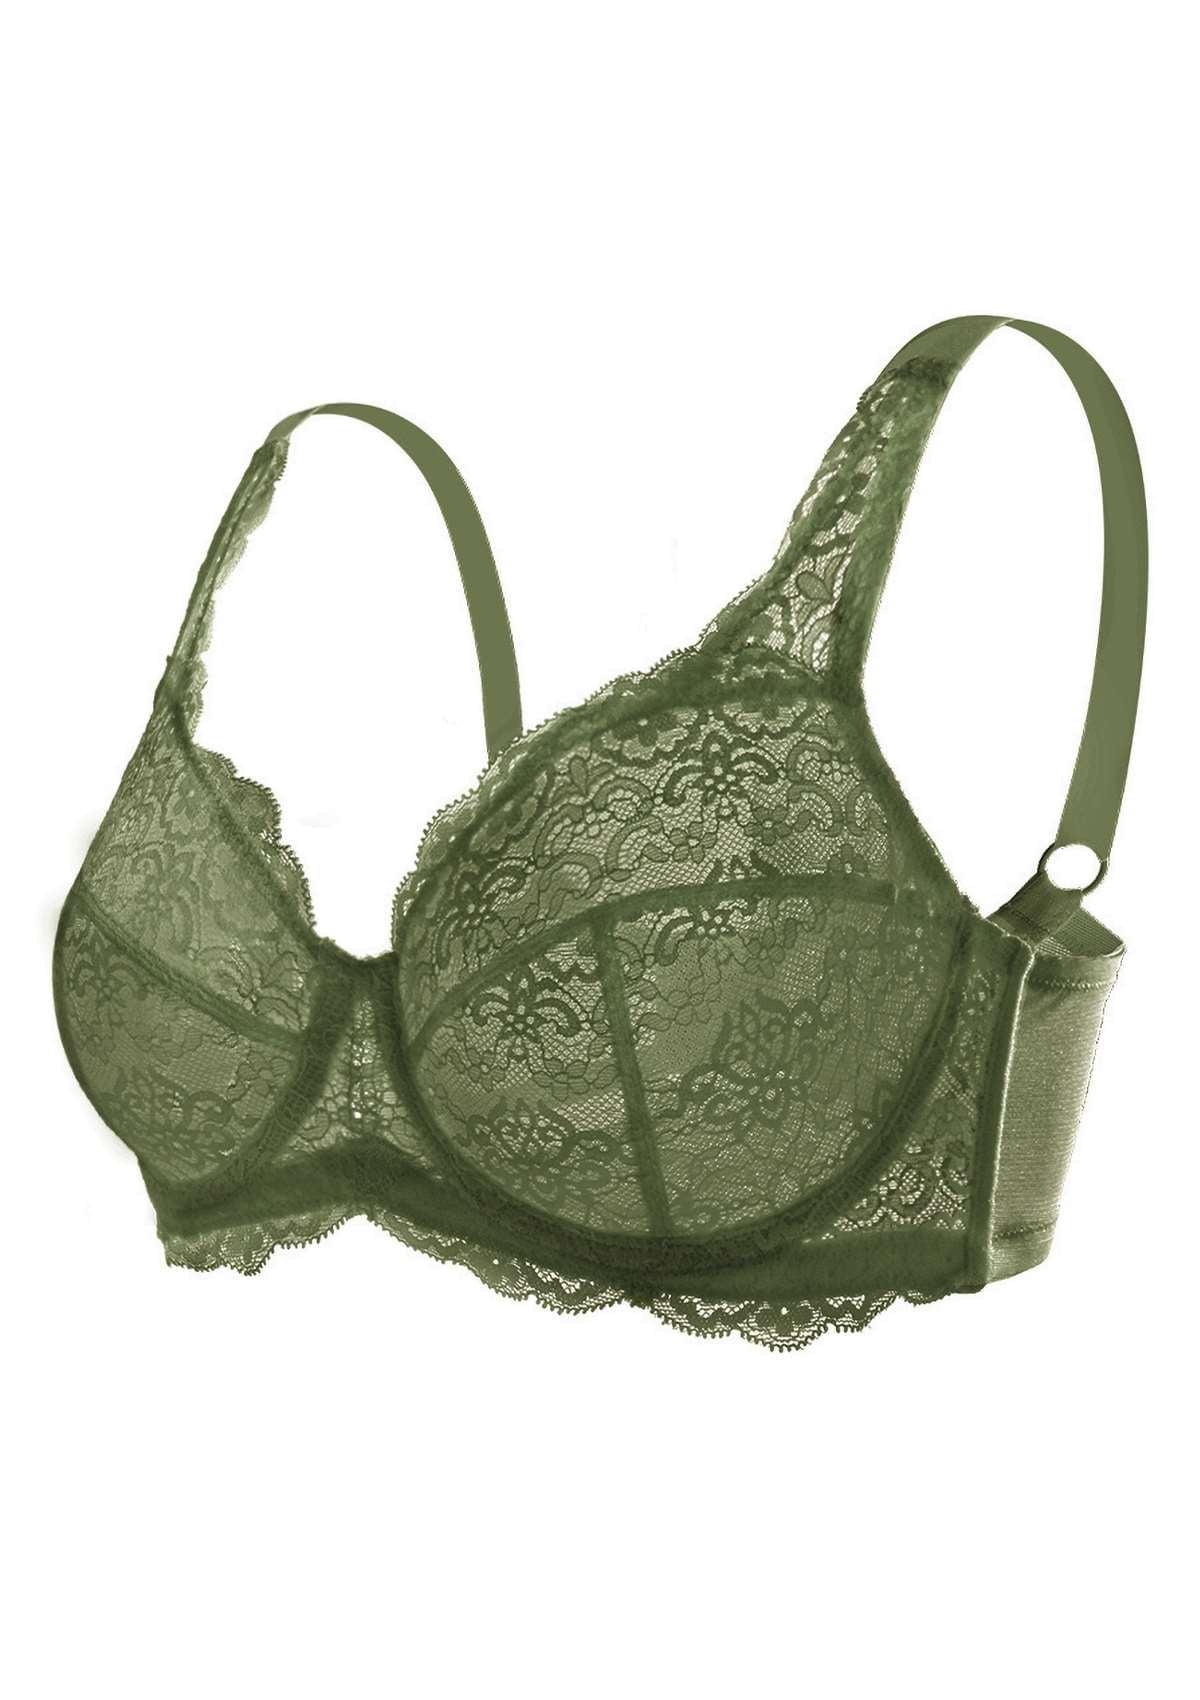 HSIA All-Over Floral Lace Unlined Bra: Minimizer Bra For Heavy Breasts - Dark Green / 44 / DD/E